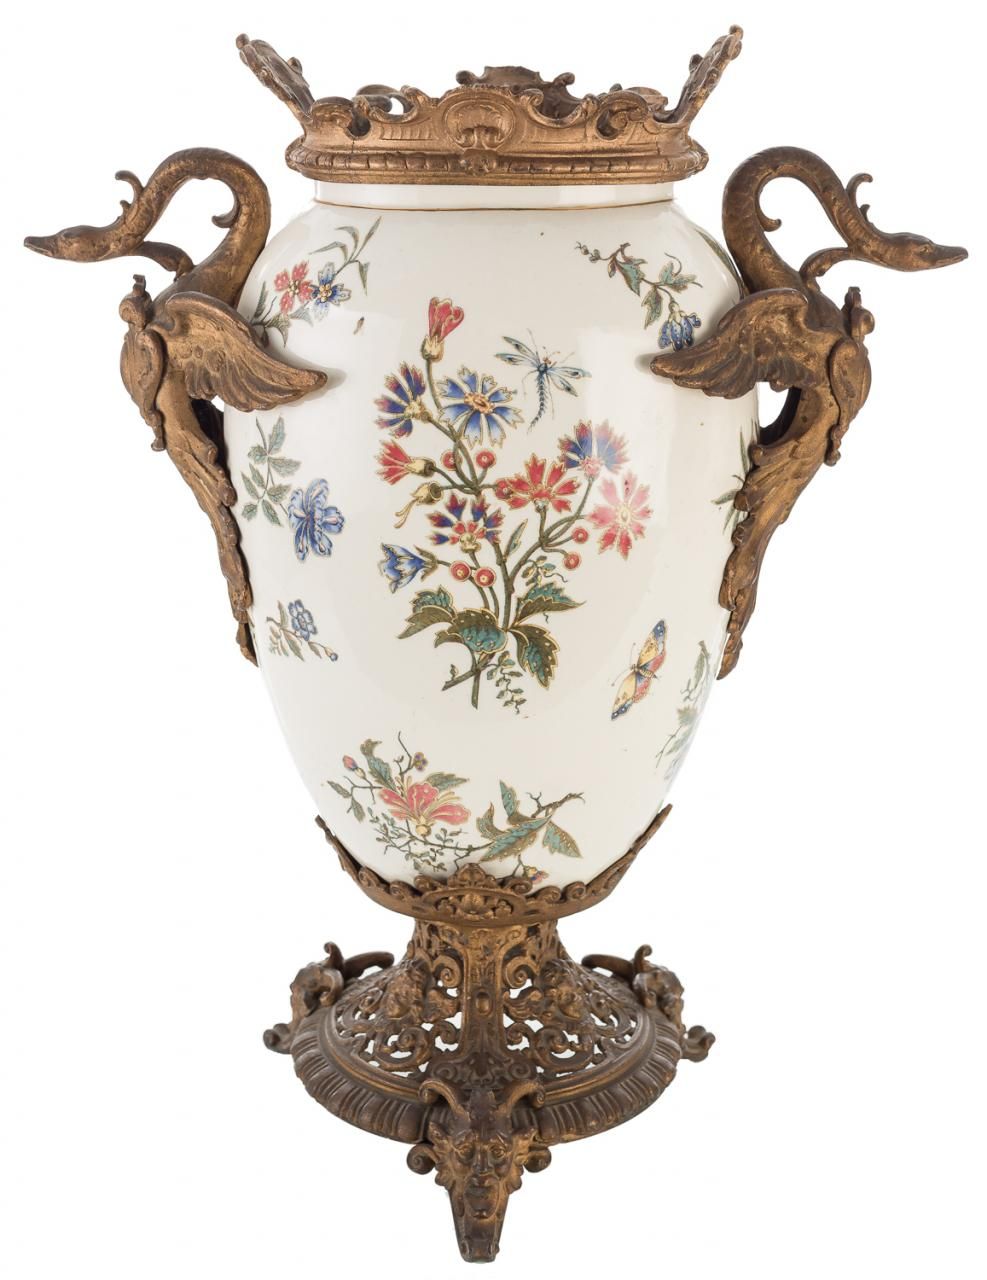 Null 釉面陶瓷花瓶，有花卉装饰和小牛皮装饰。英国，Fns.S. XIX

高度：49厘米
修复。